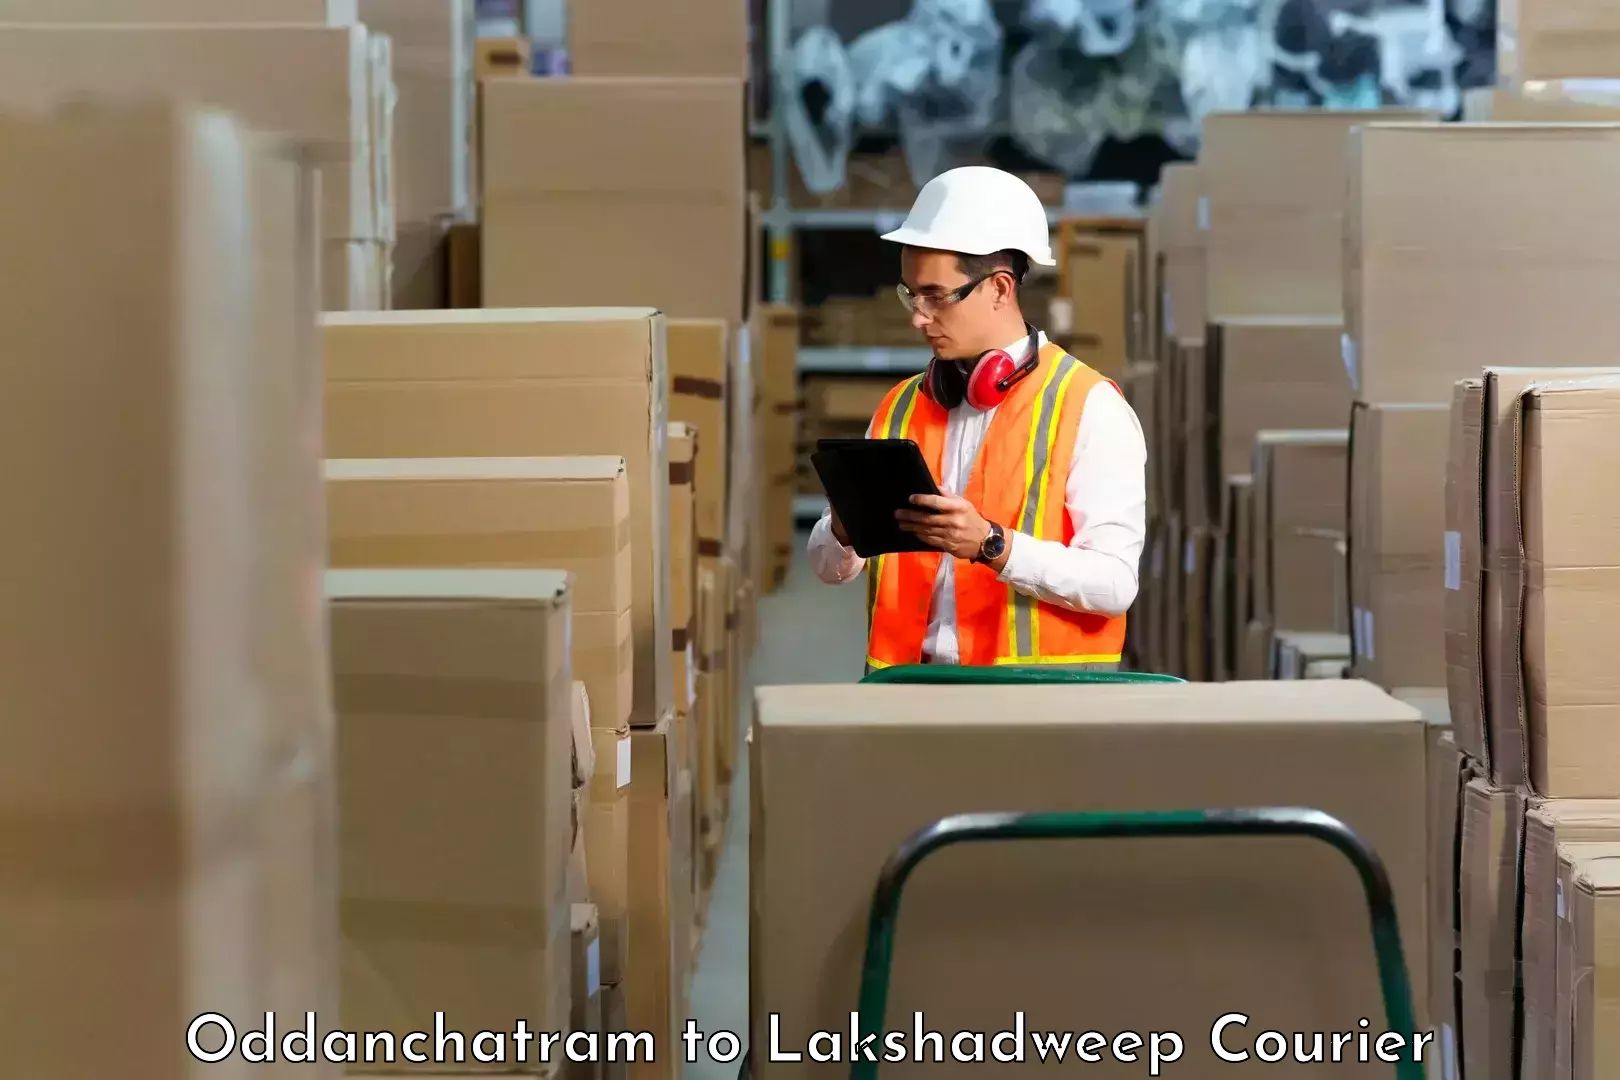 Logistics service provider in Oddanchatram to Lakshadweep